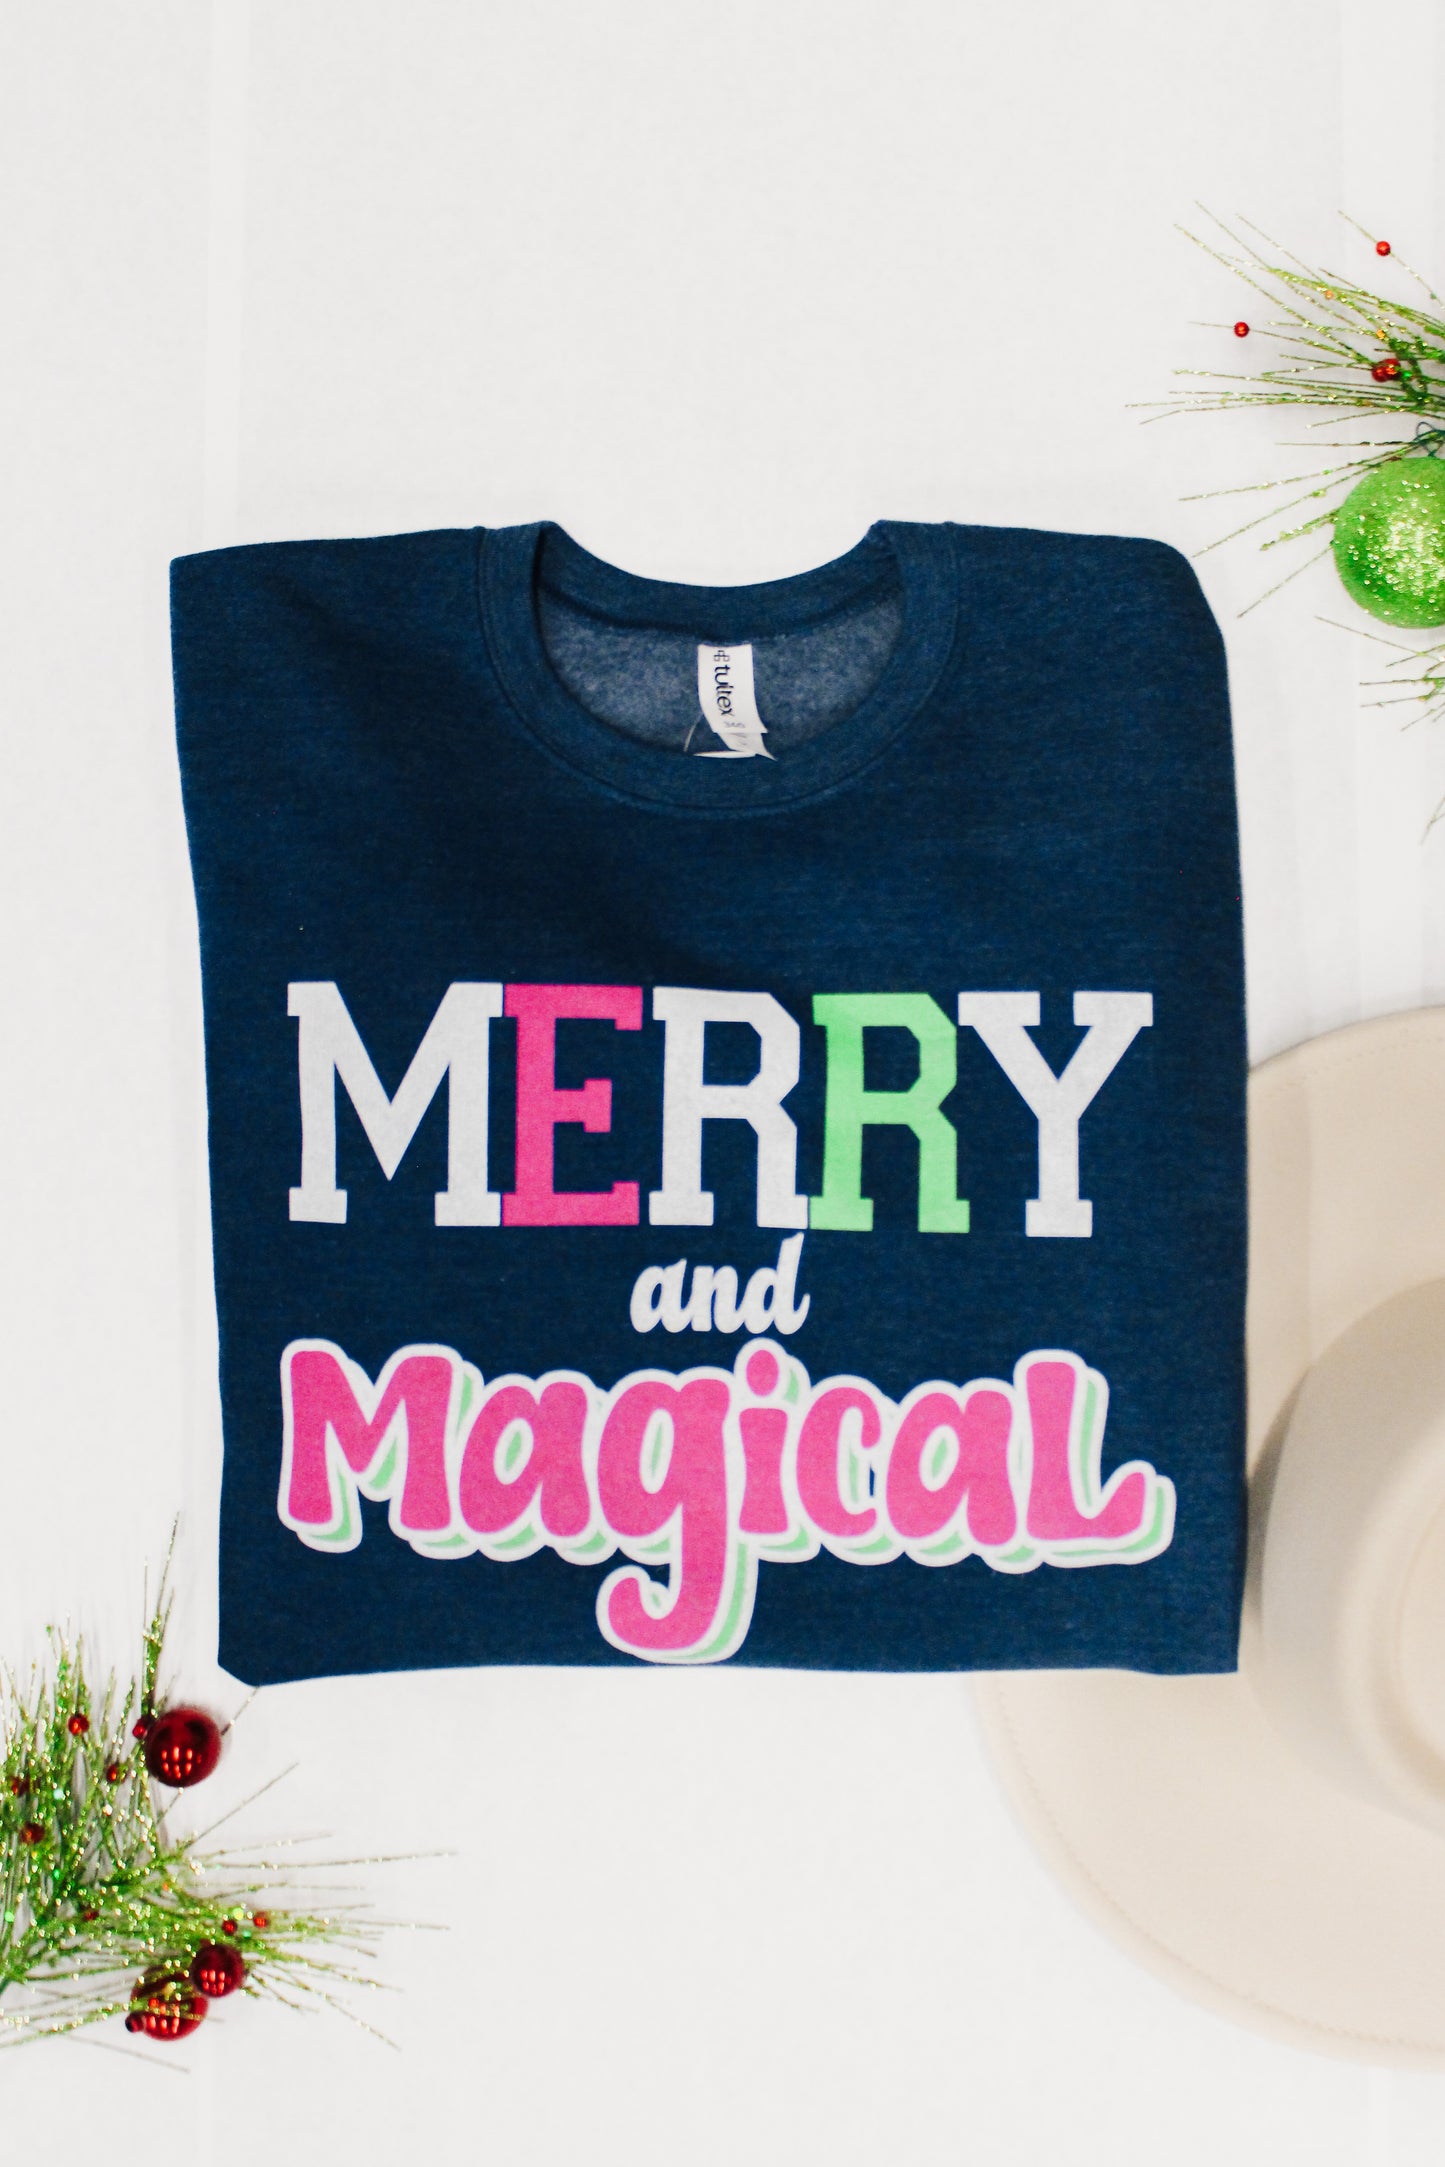 Merry And Magical Navy Sweatshirt